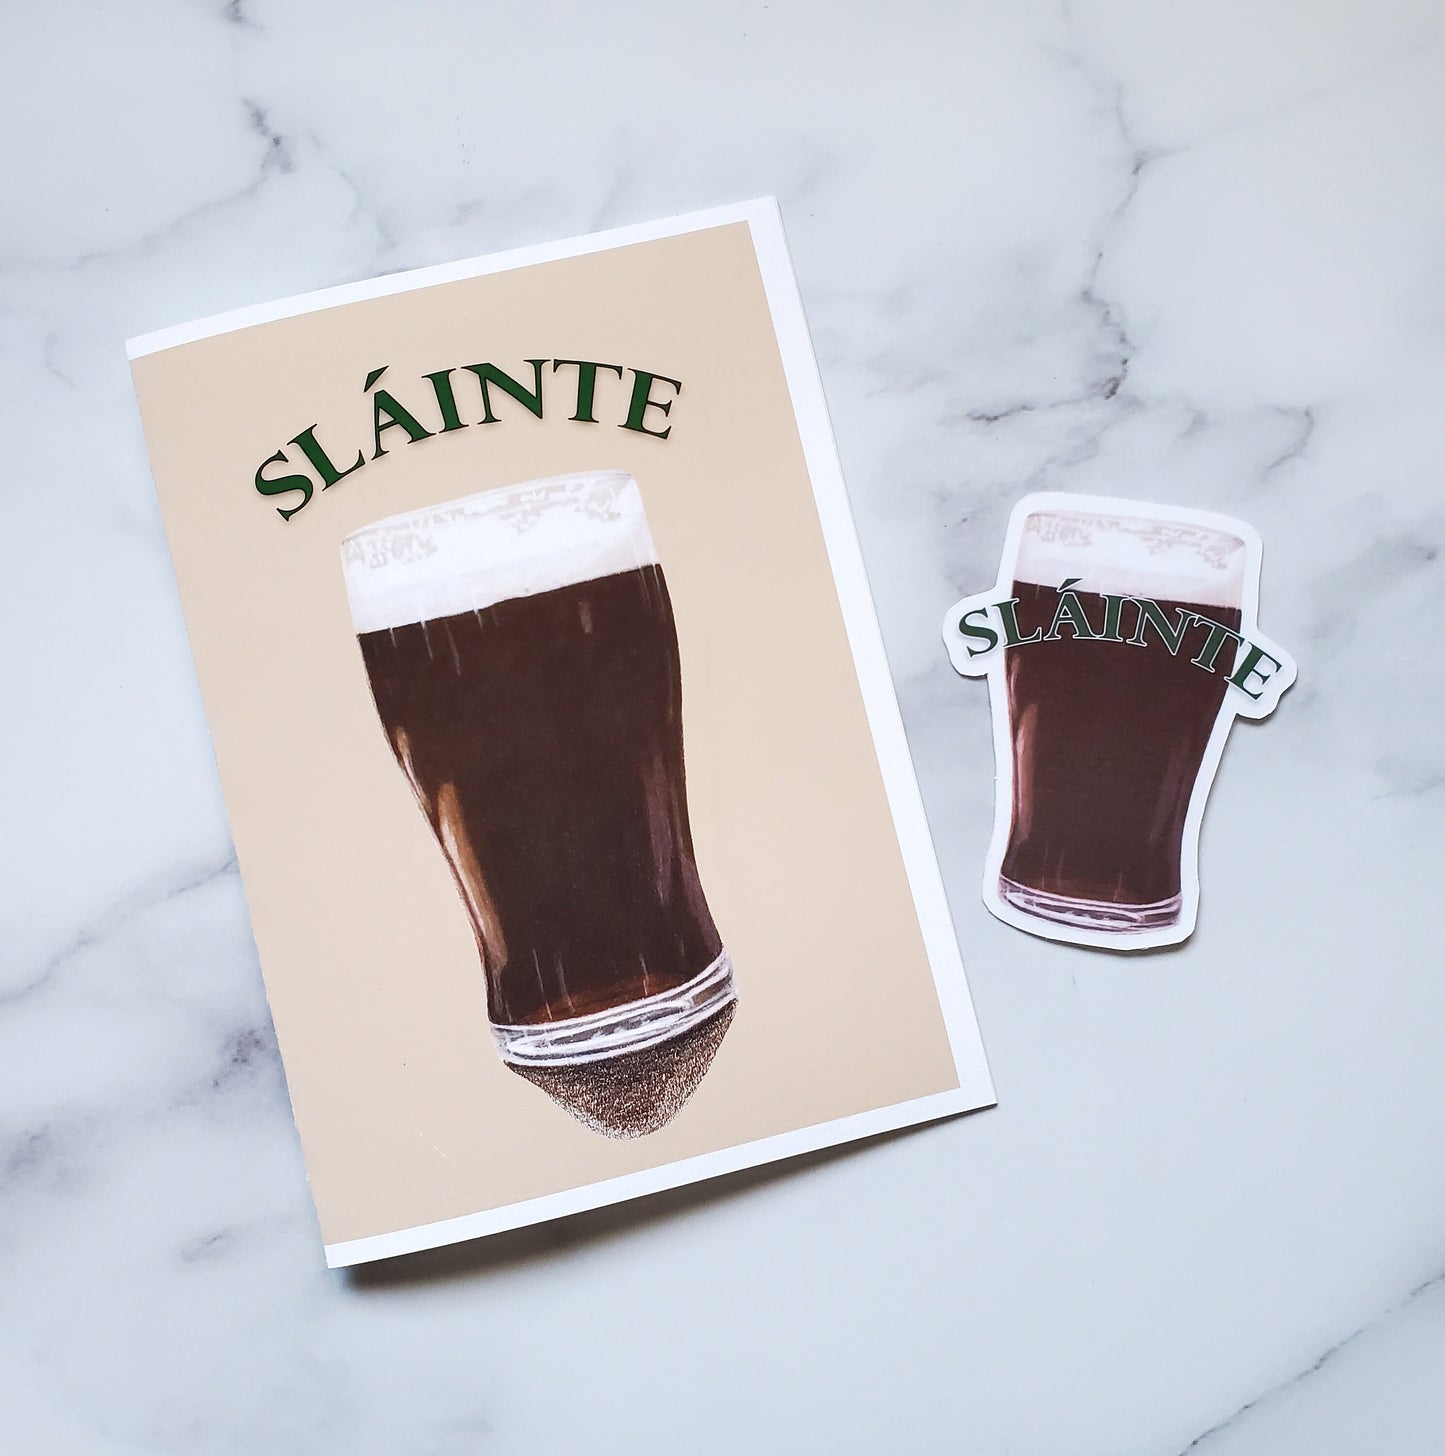 St. Patrick's Day Card, Sláinte Beer Card